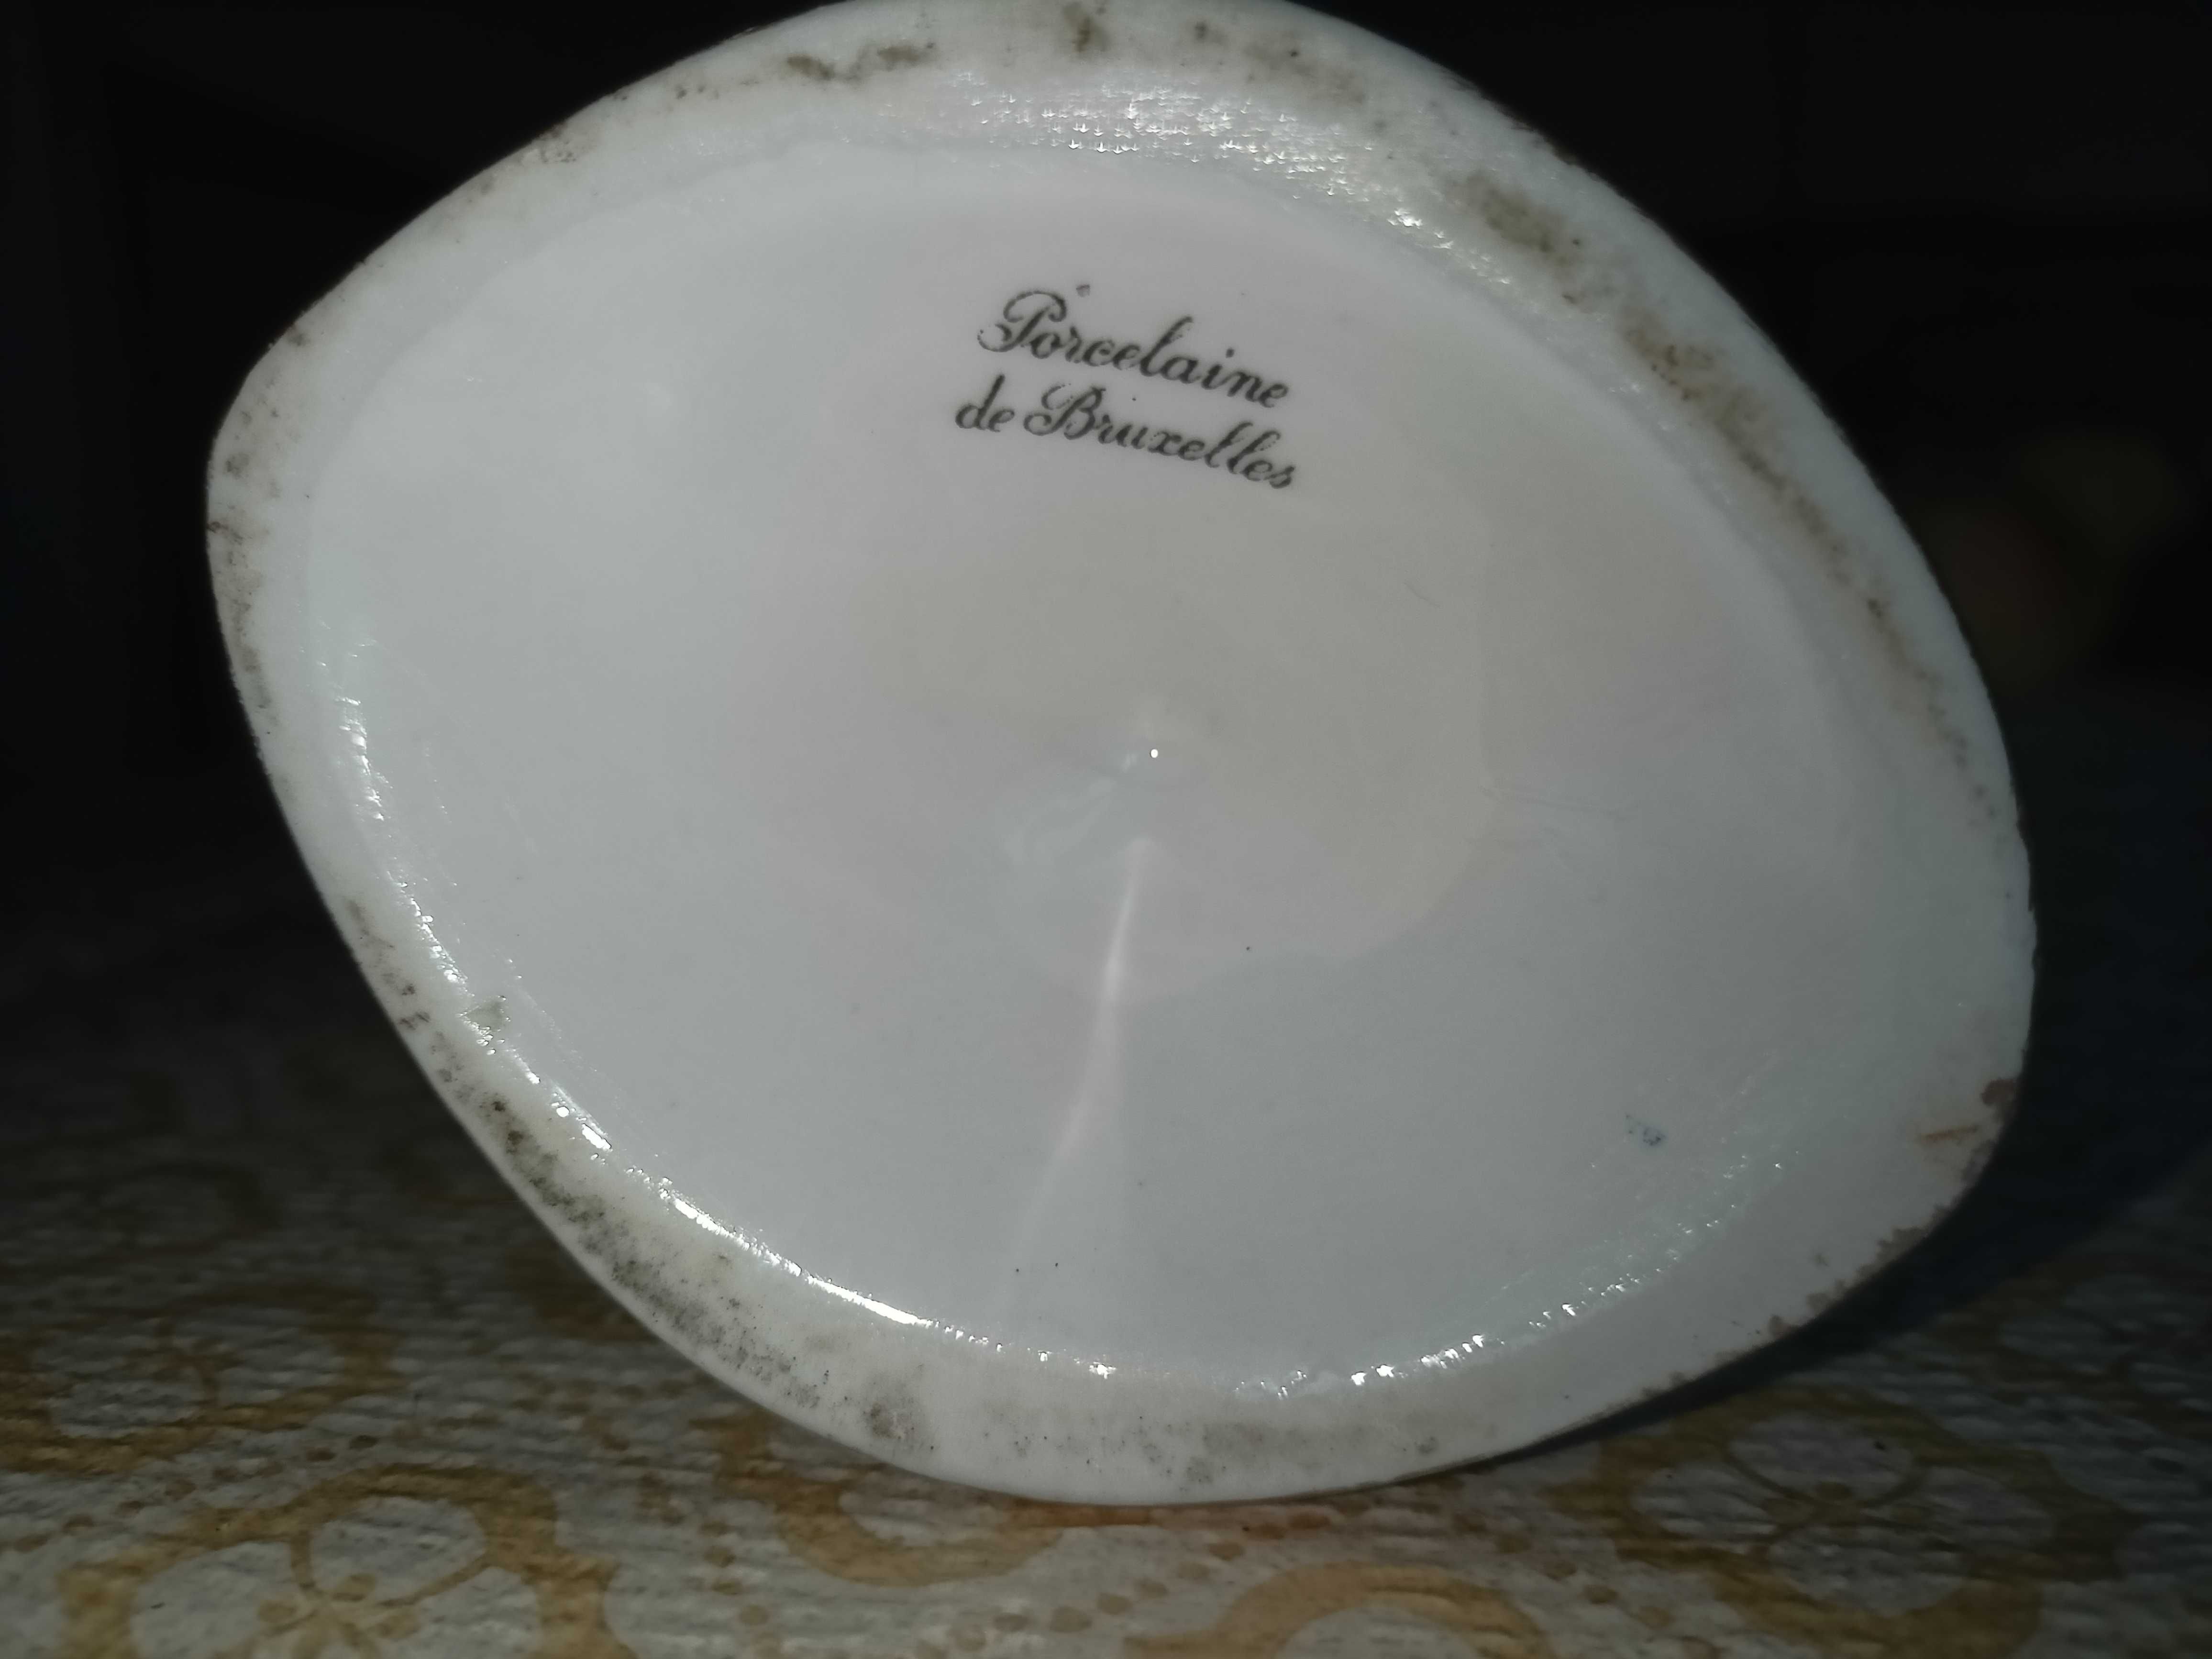 Wazon, porcelana brukselska, porcelain de bruxelles